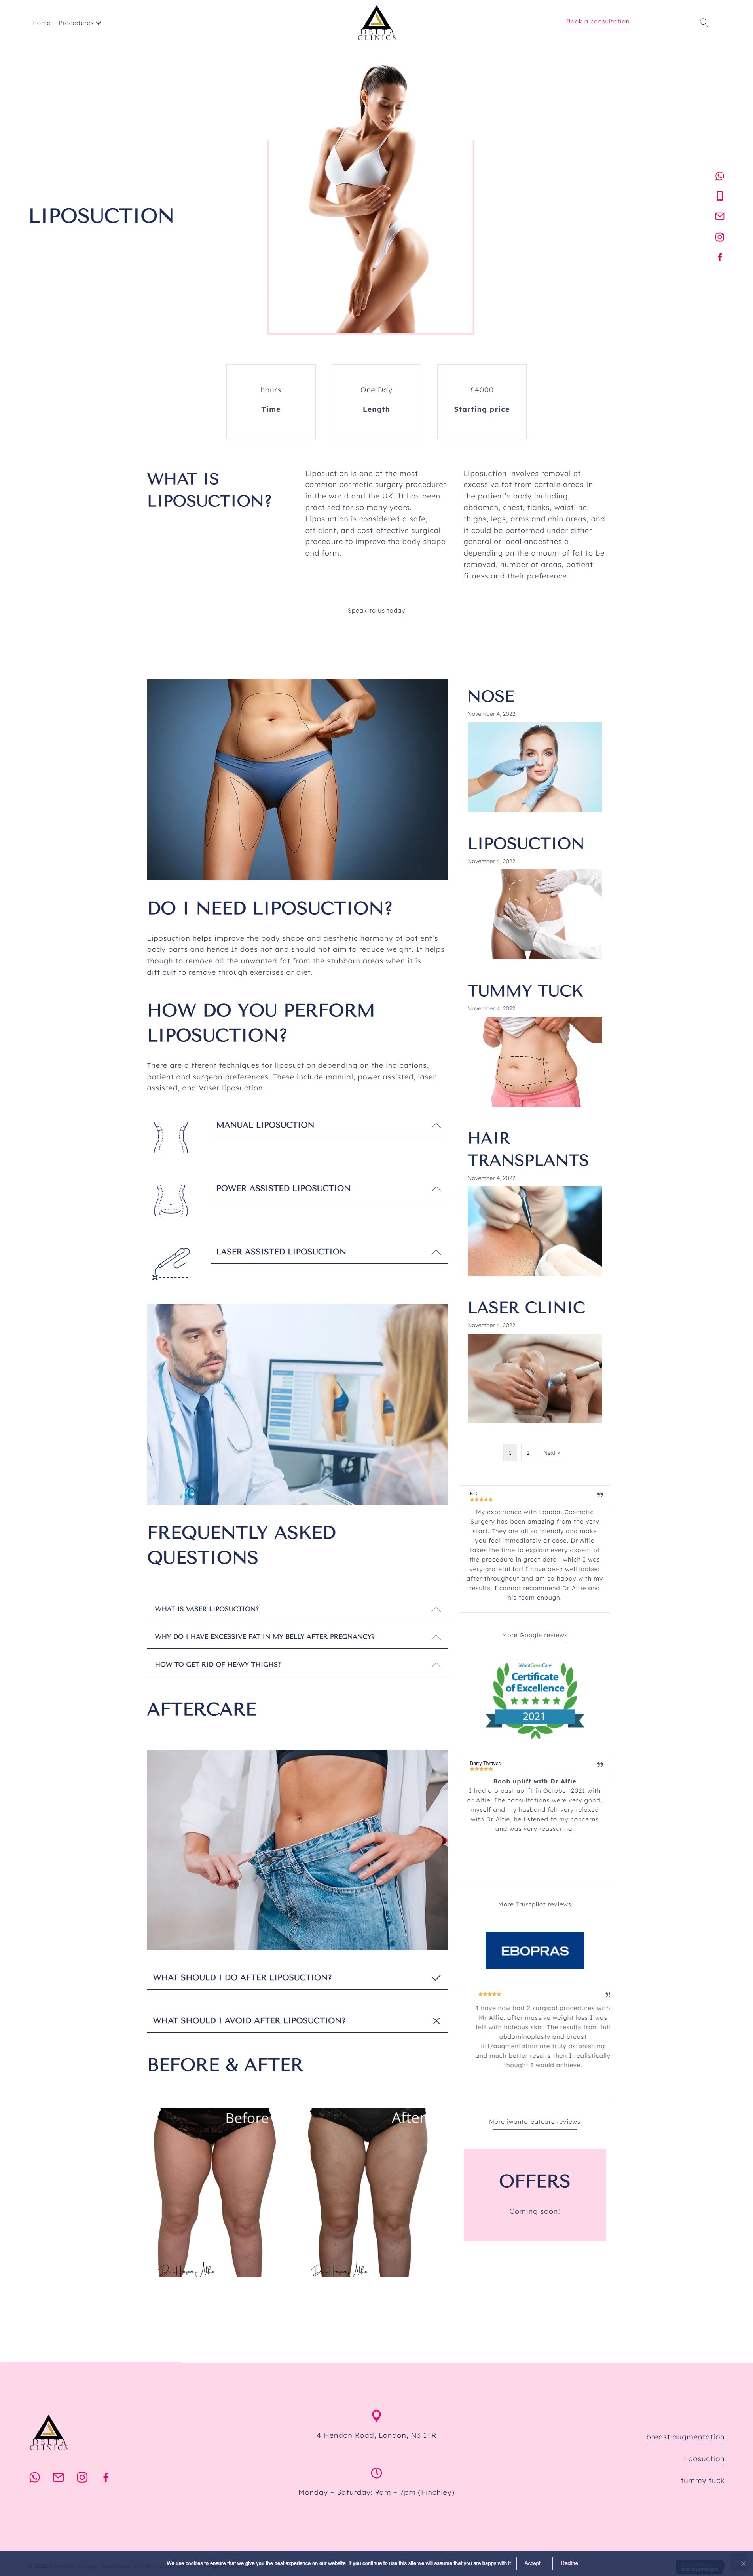 Delta Clinics liposuction desktop